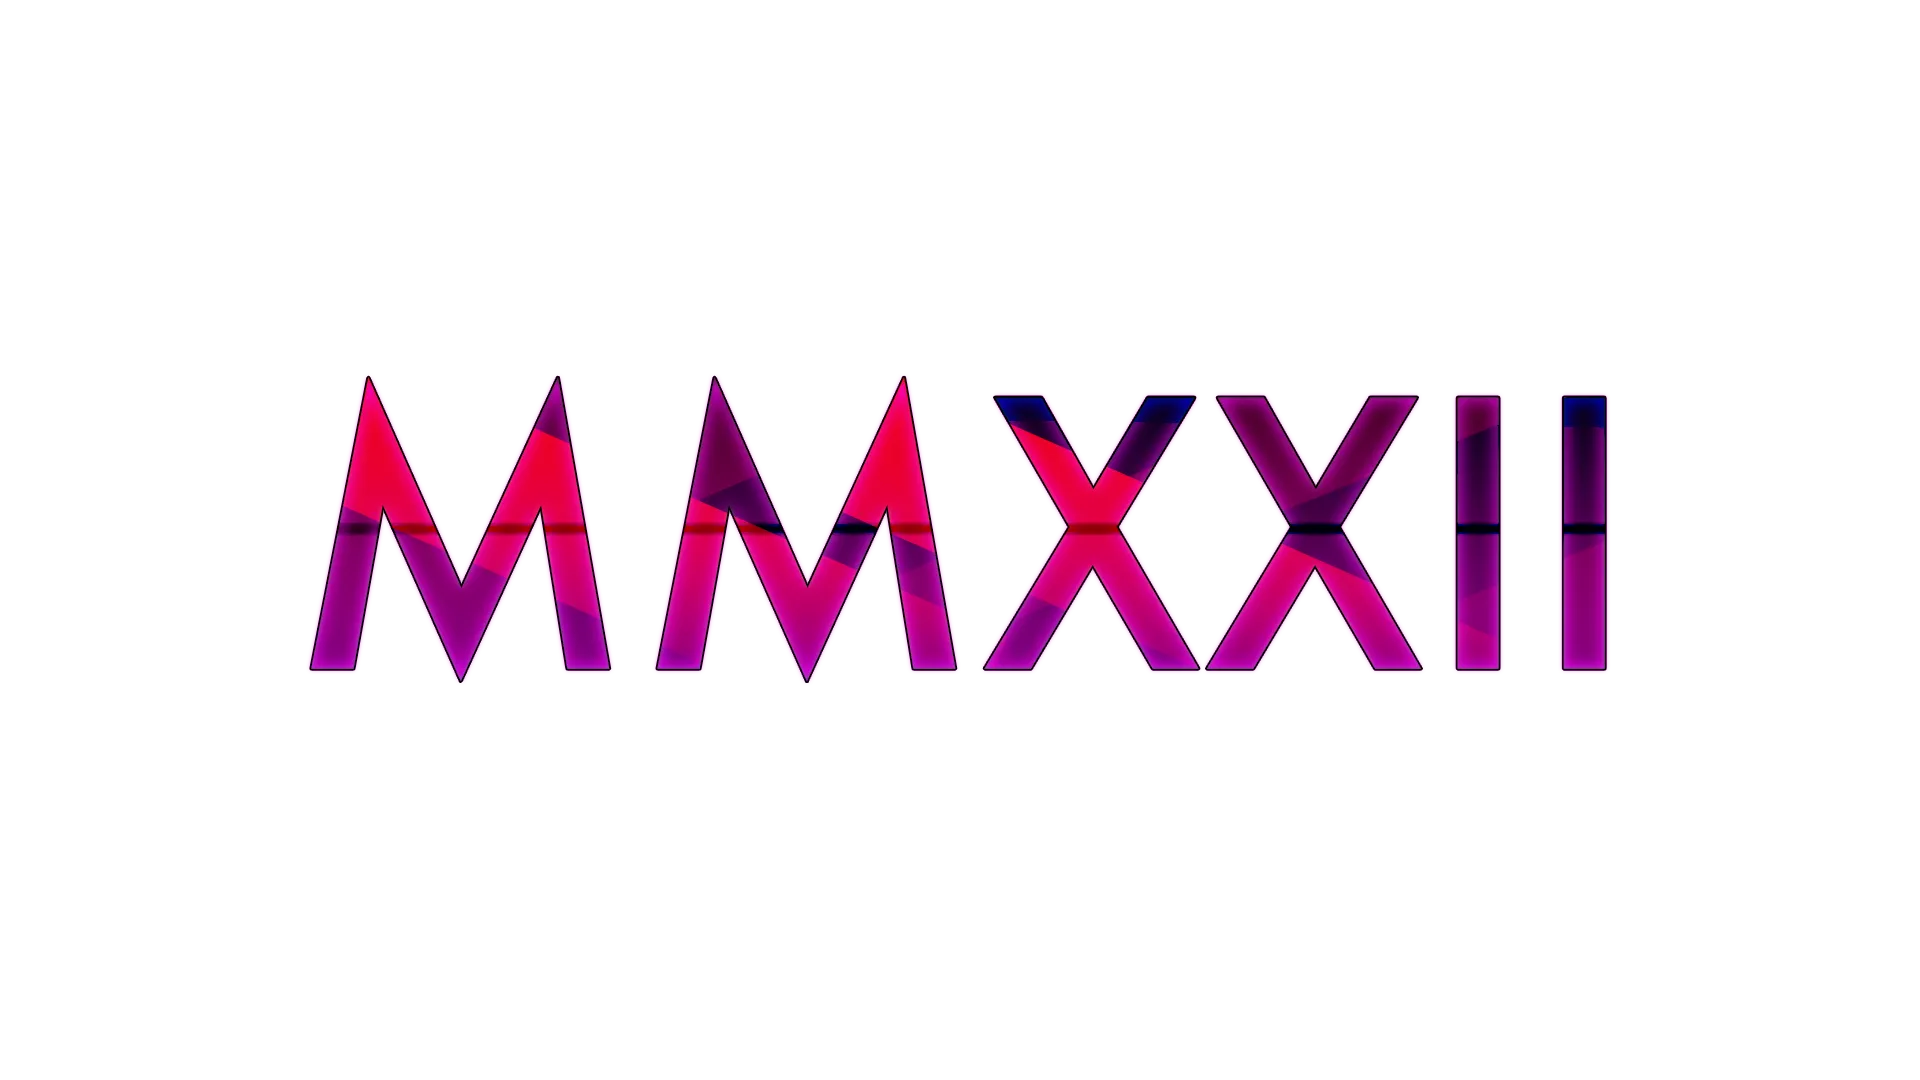 roman numerals MMXXII in pink/purple